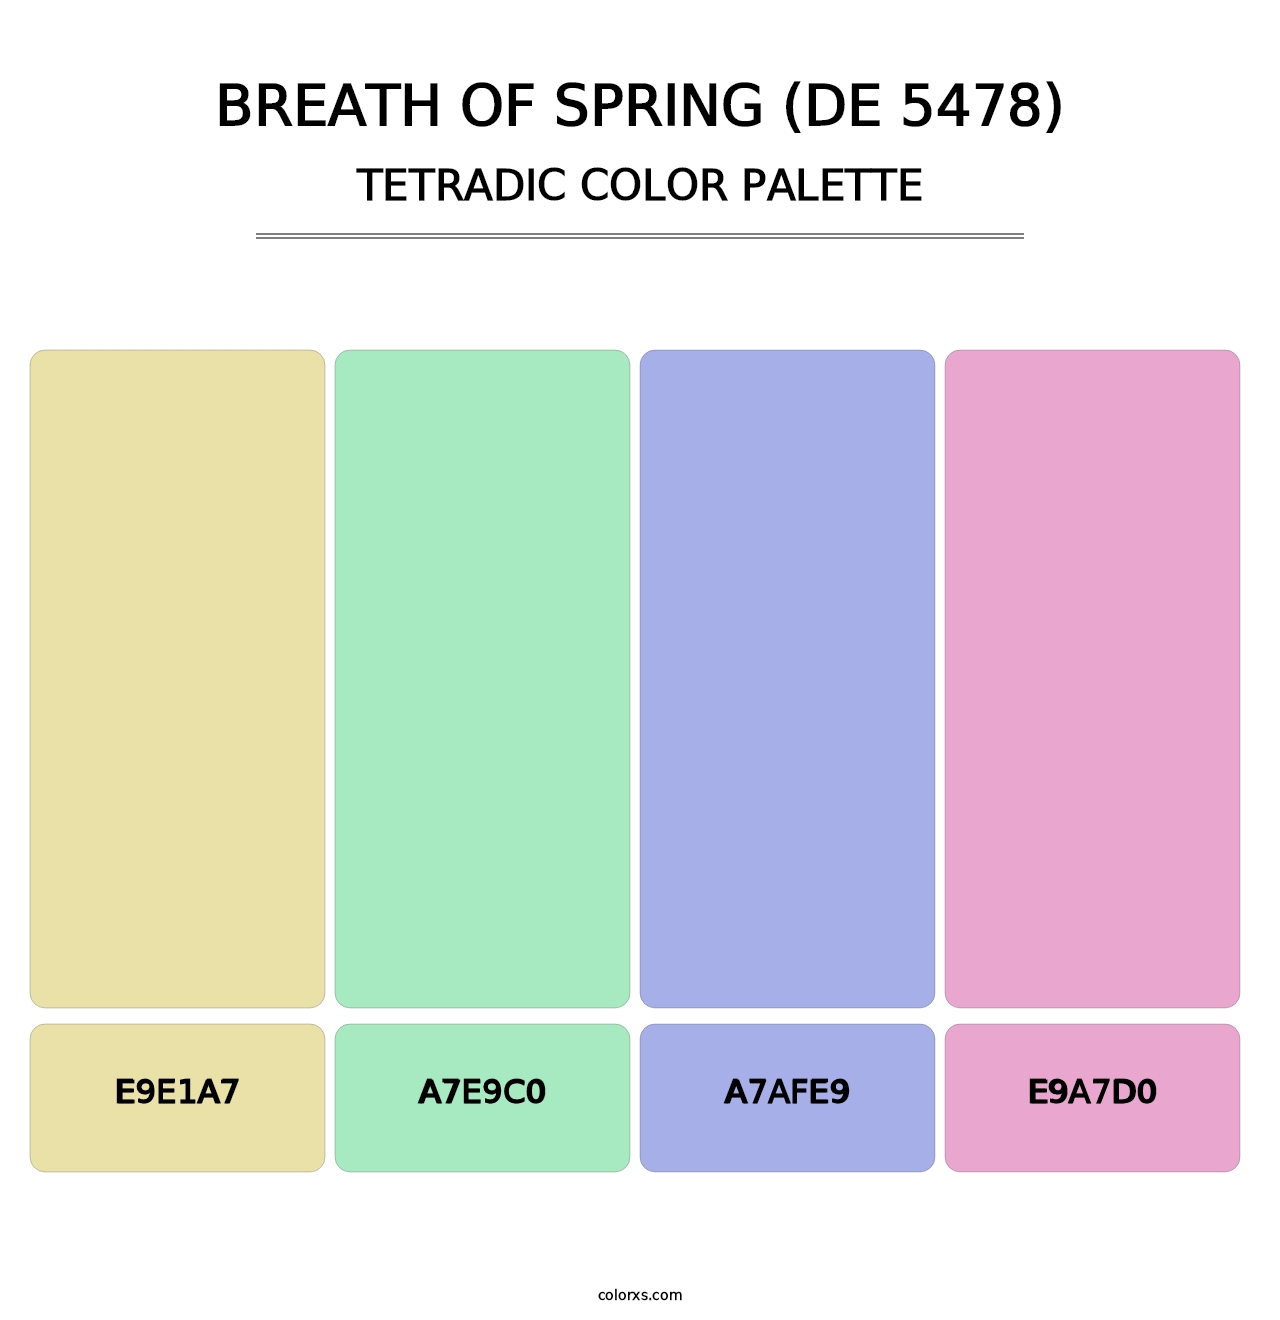 Breath of Spring (DE 5478) - Tetradic Color Palette